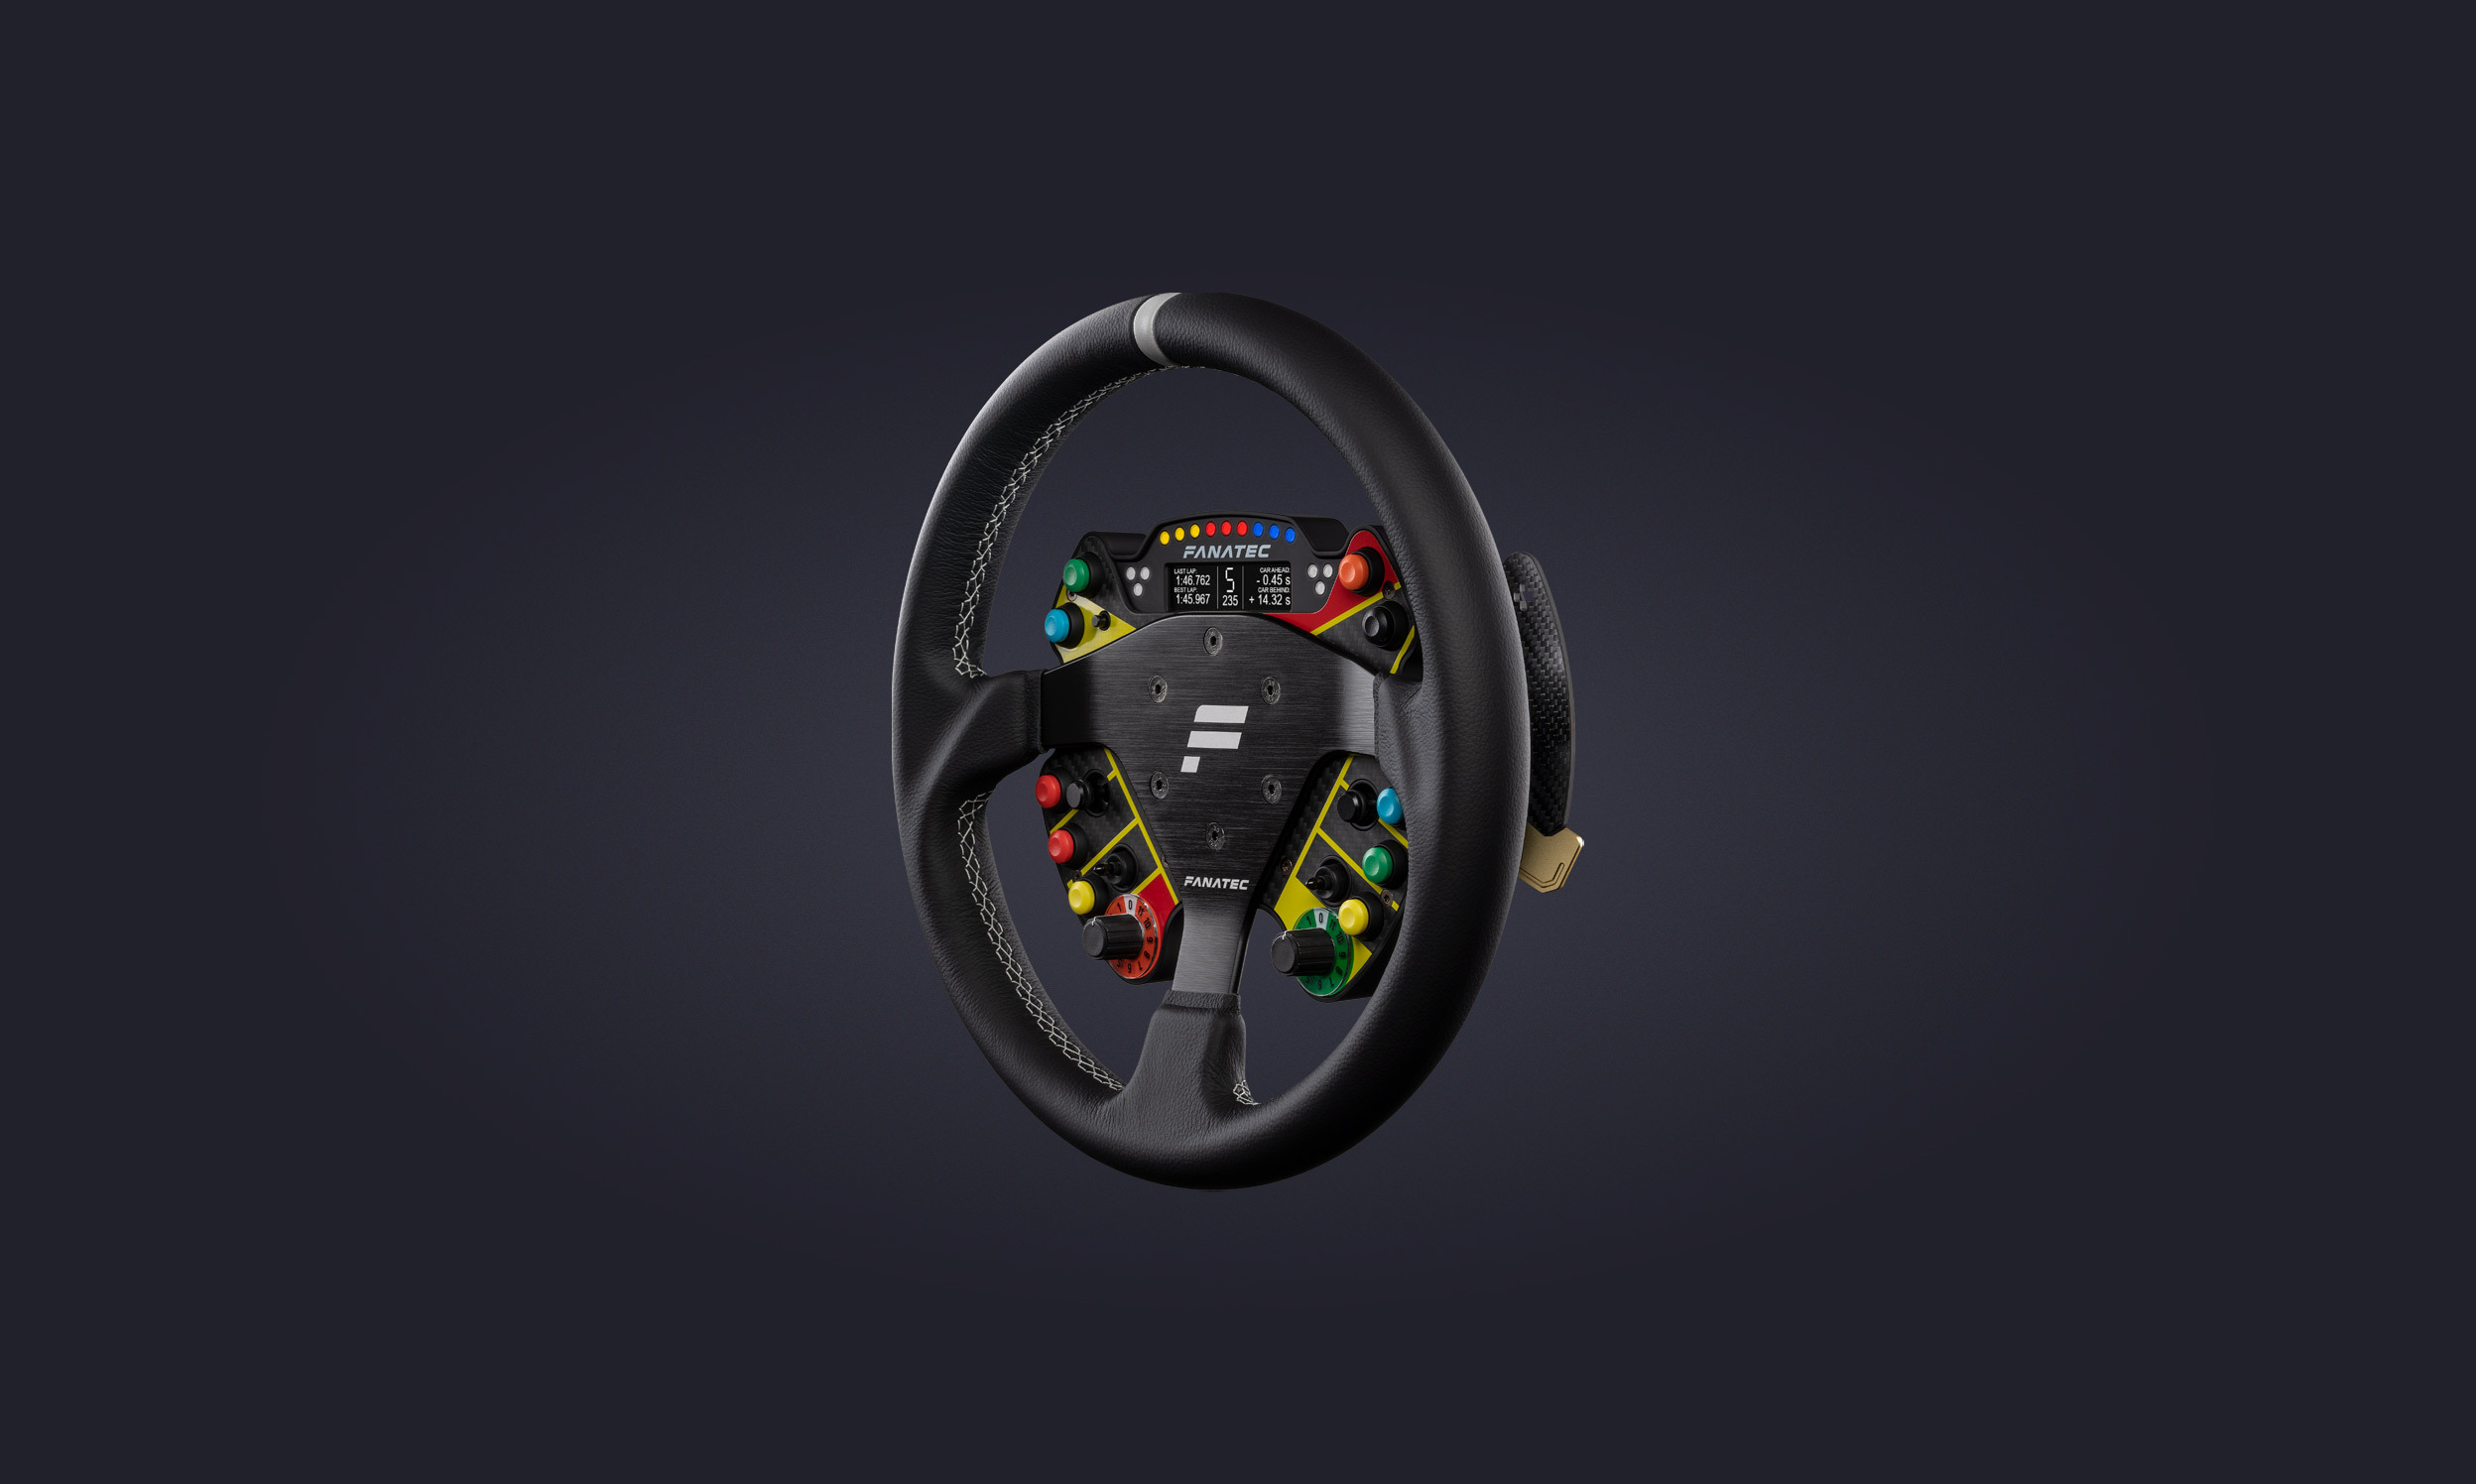 Podium Steering Wheel Fanatec GT World Challenge